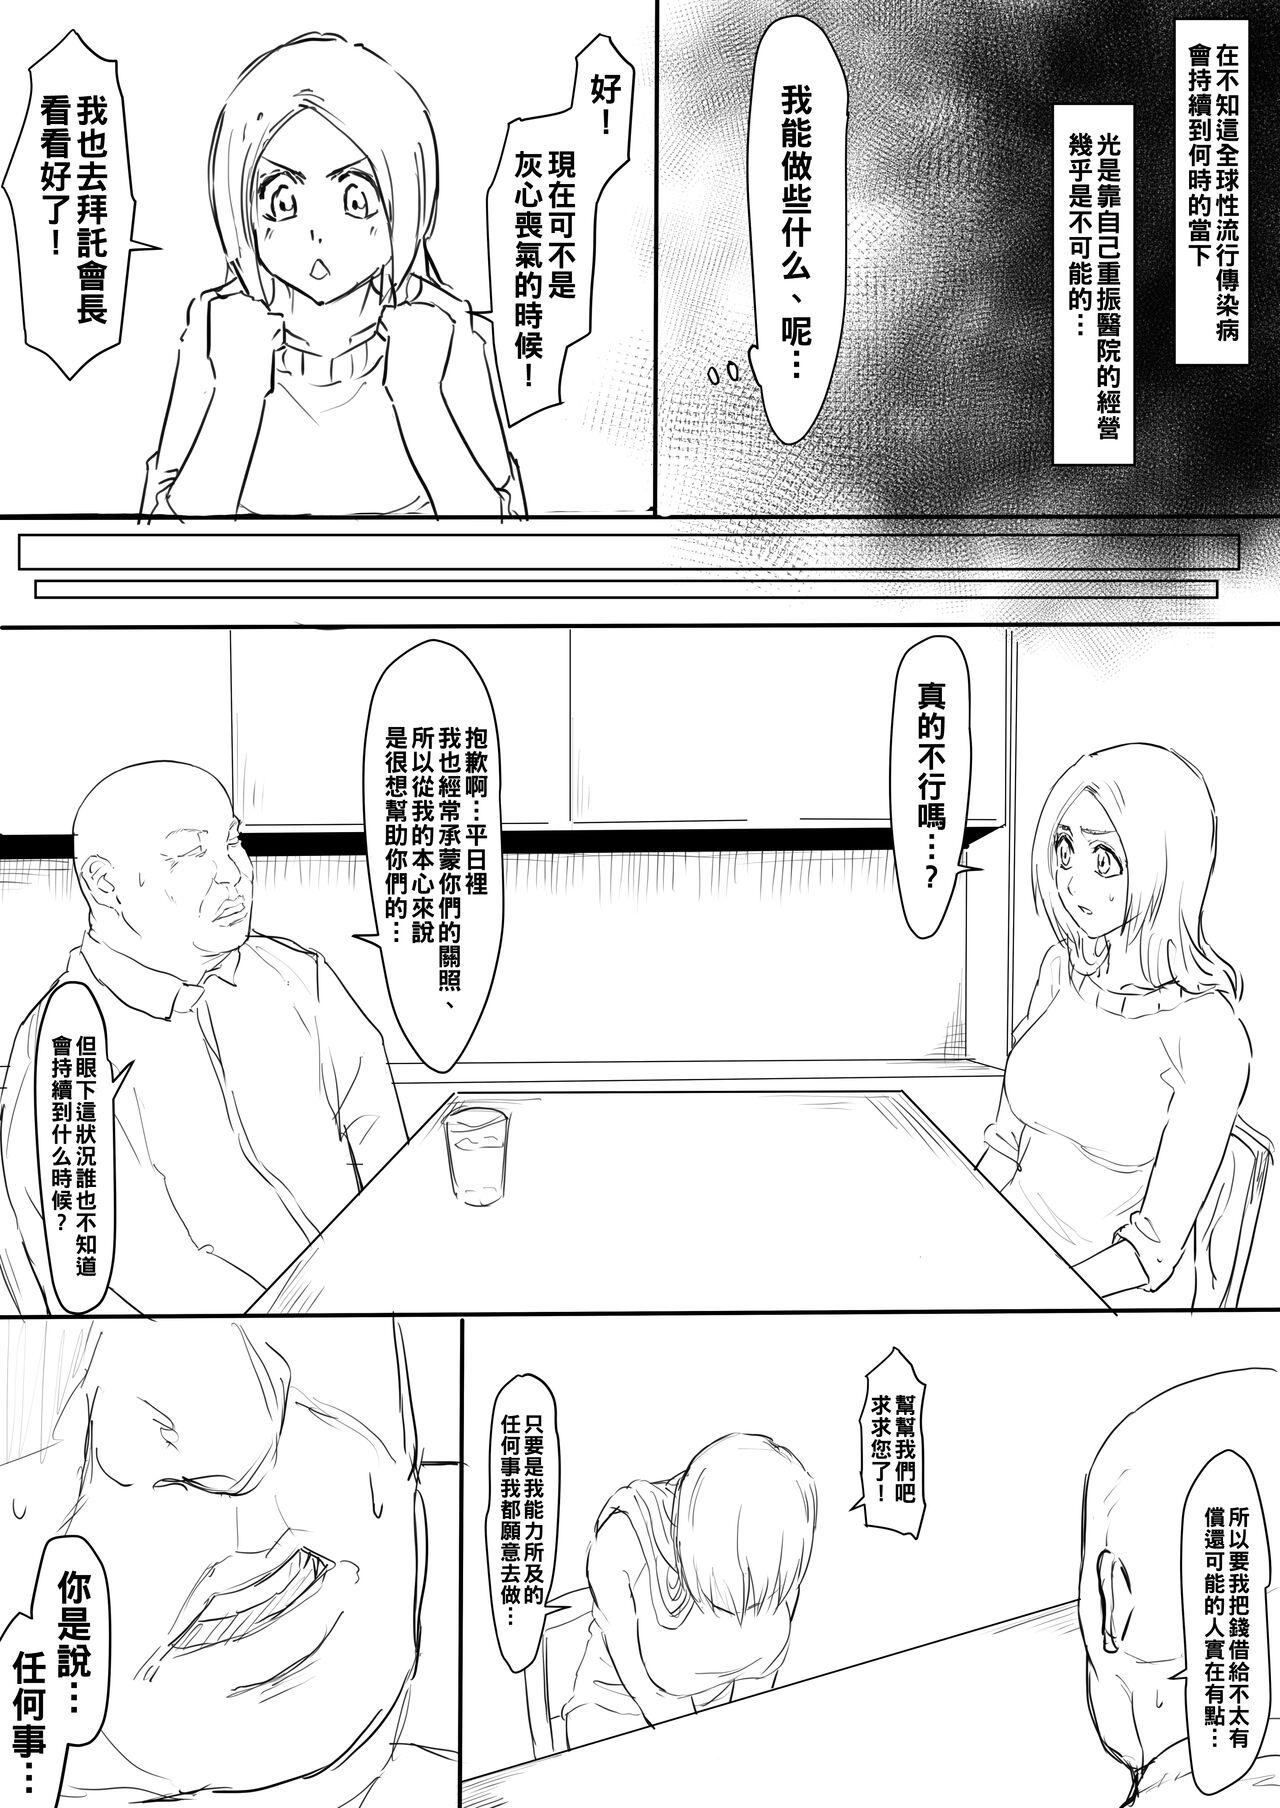 Blowjob Orihime Manga - Bleach Alt - Page 2